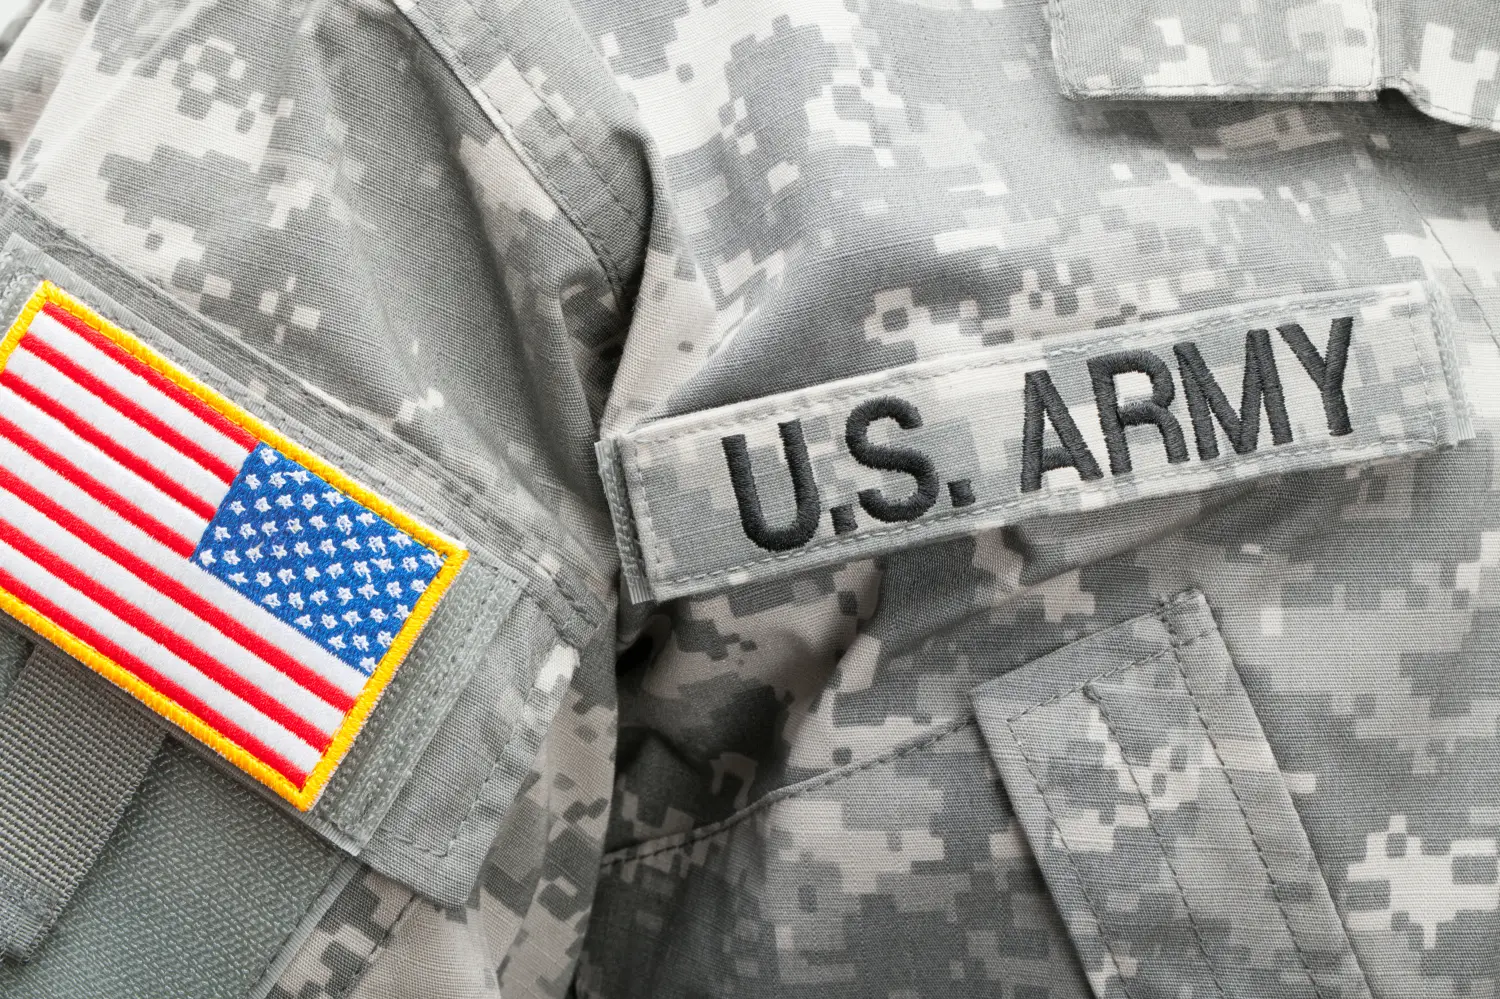 U.S. Army image